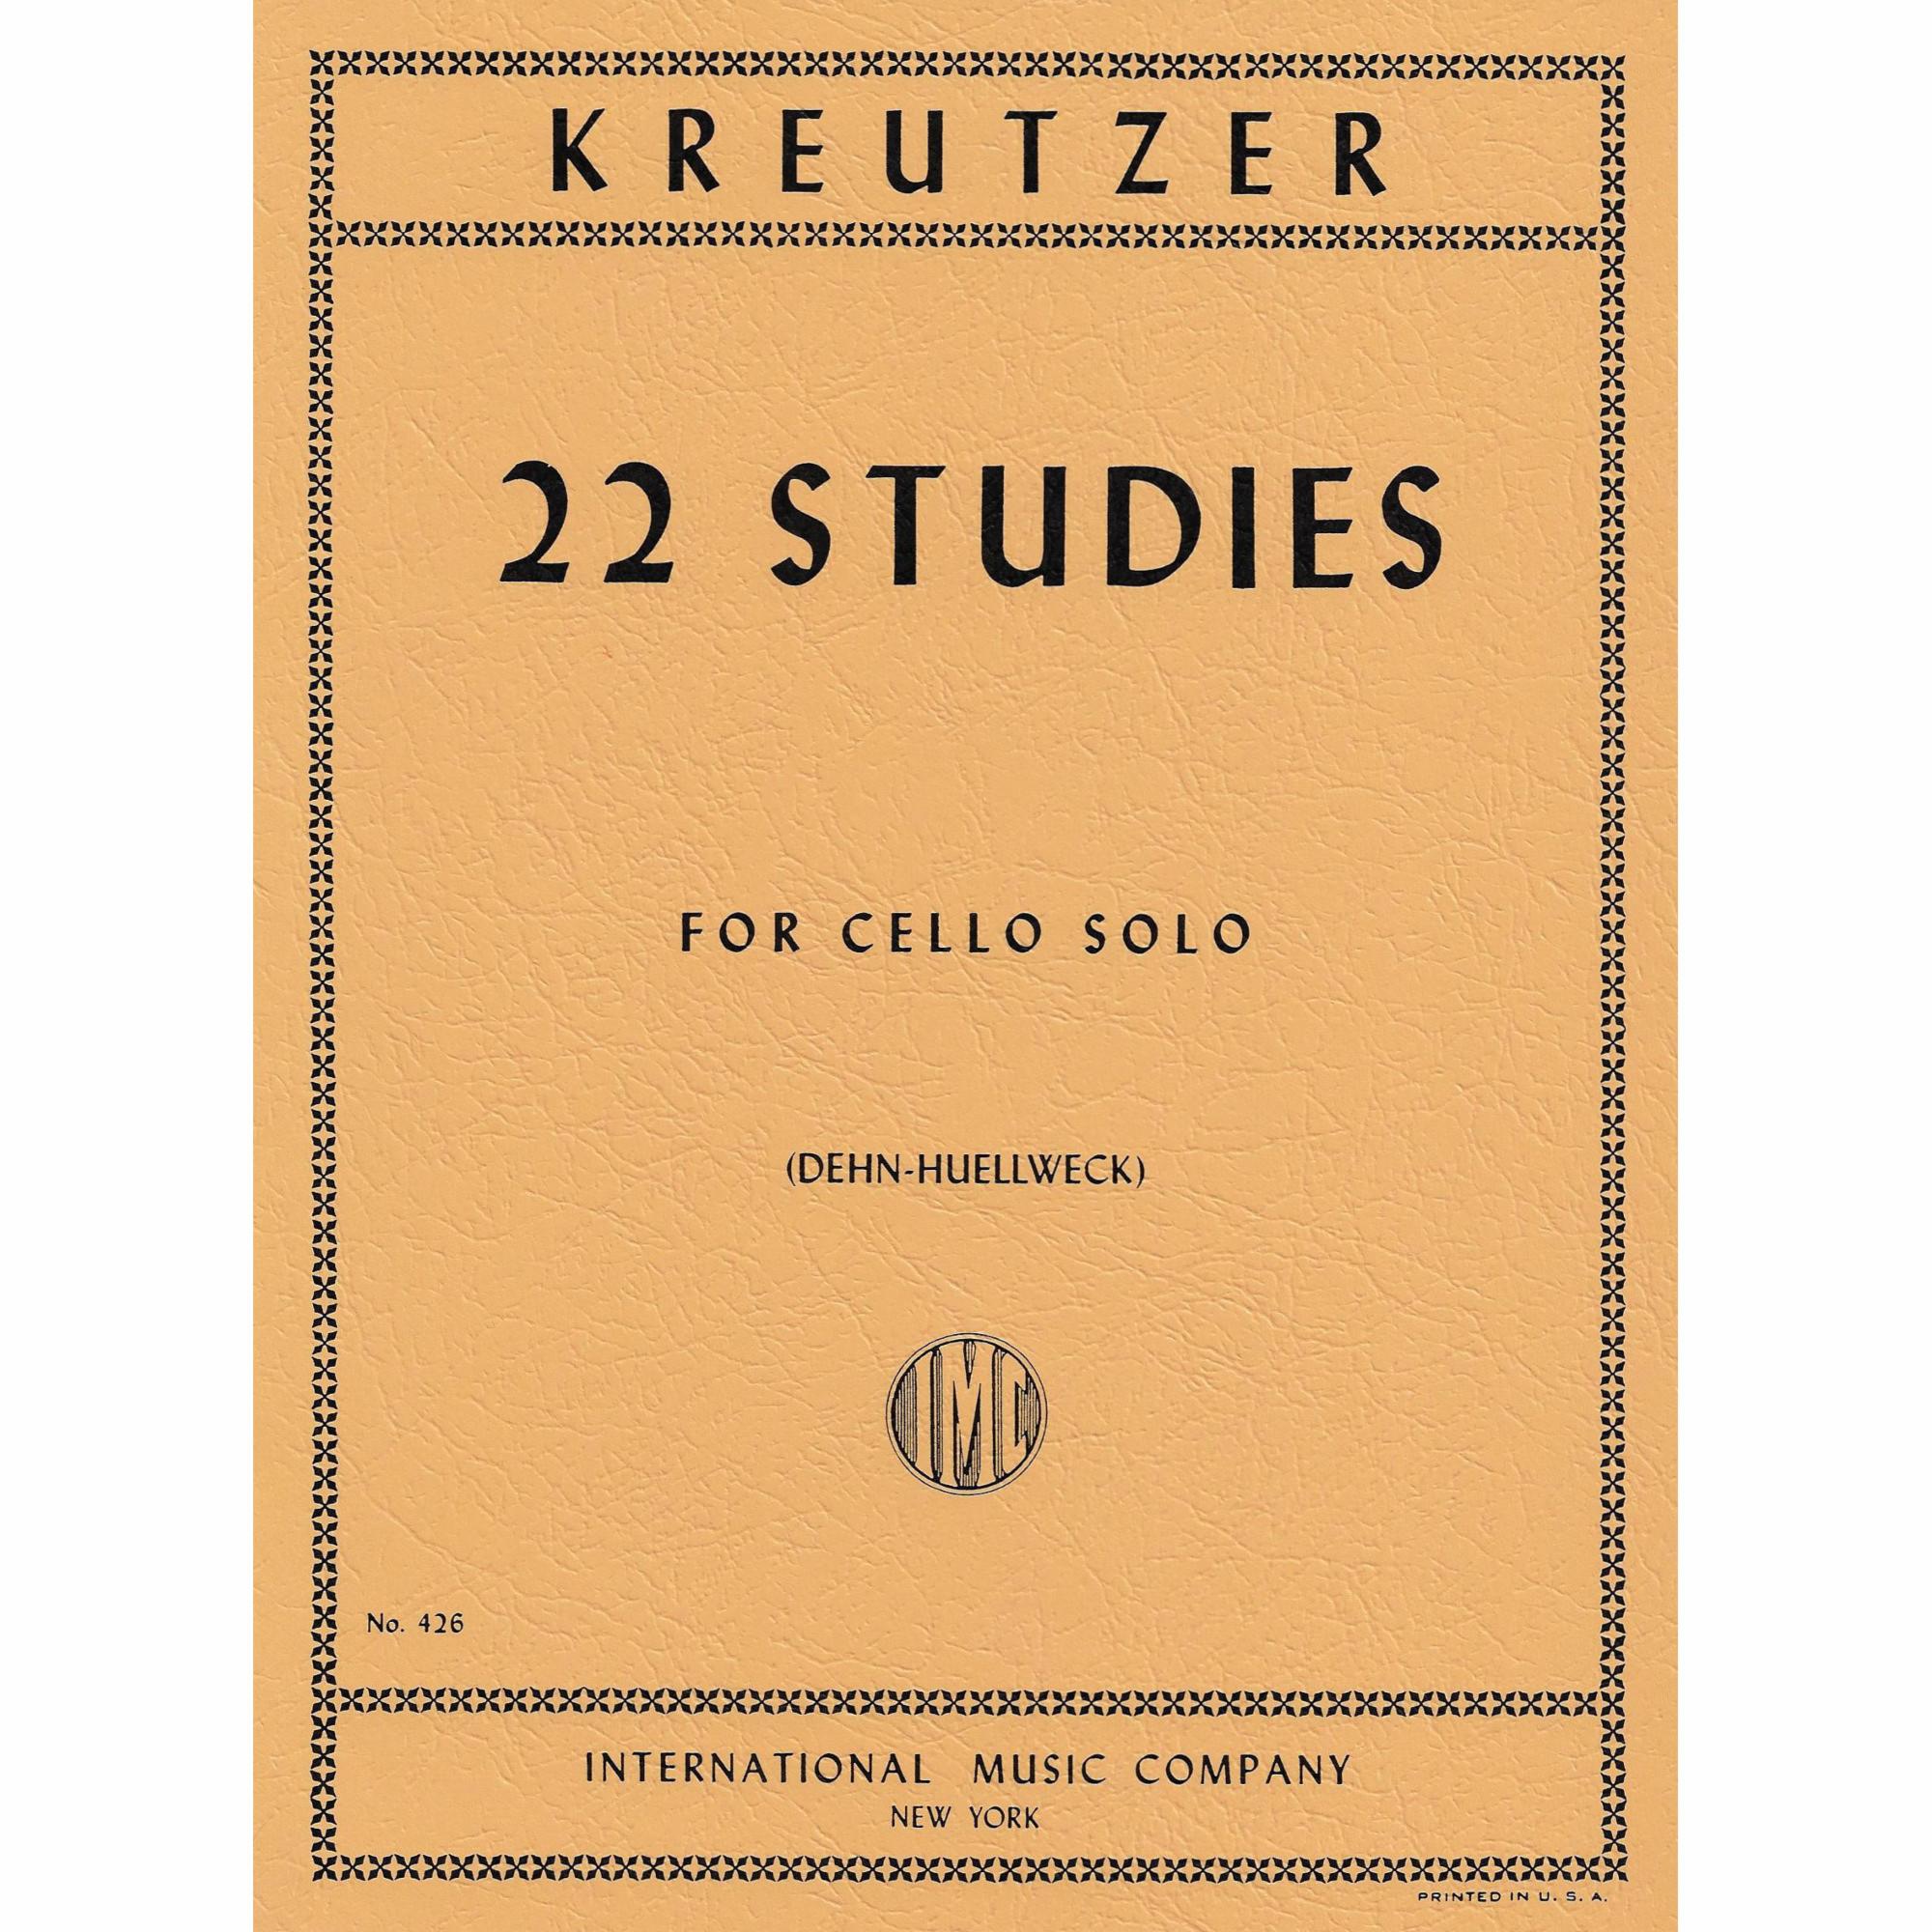 Kreutzer -- 22 Studies for Cello